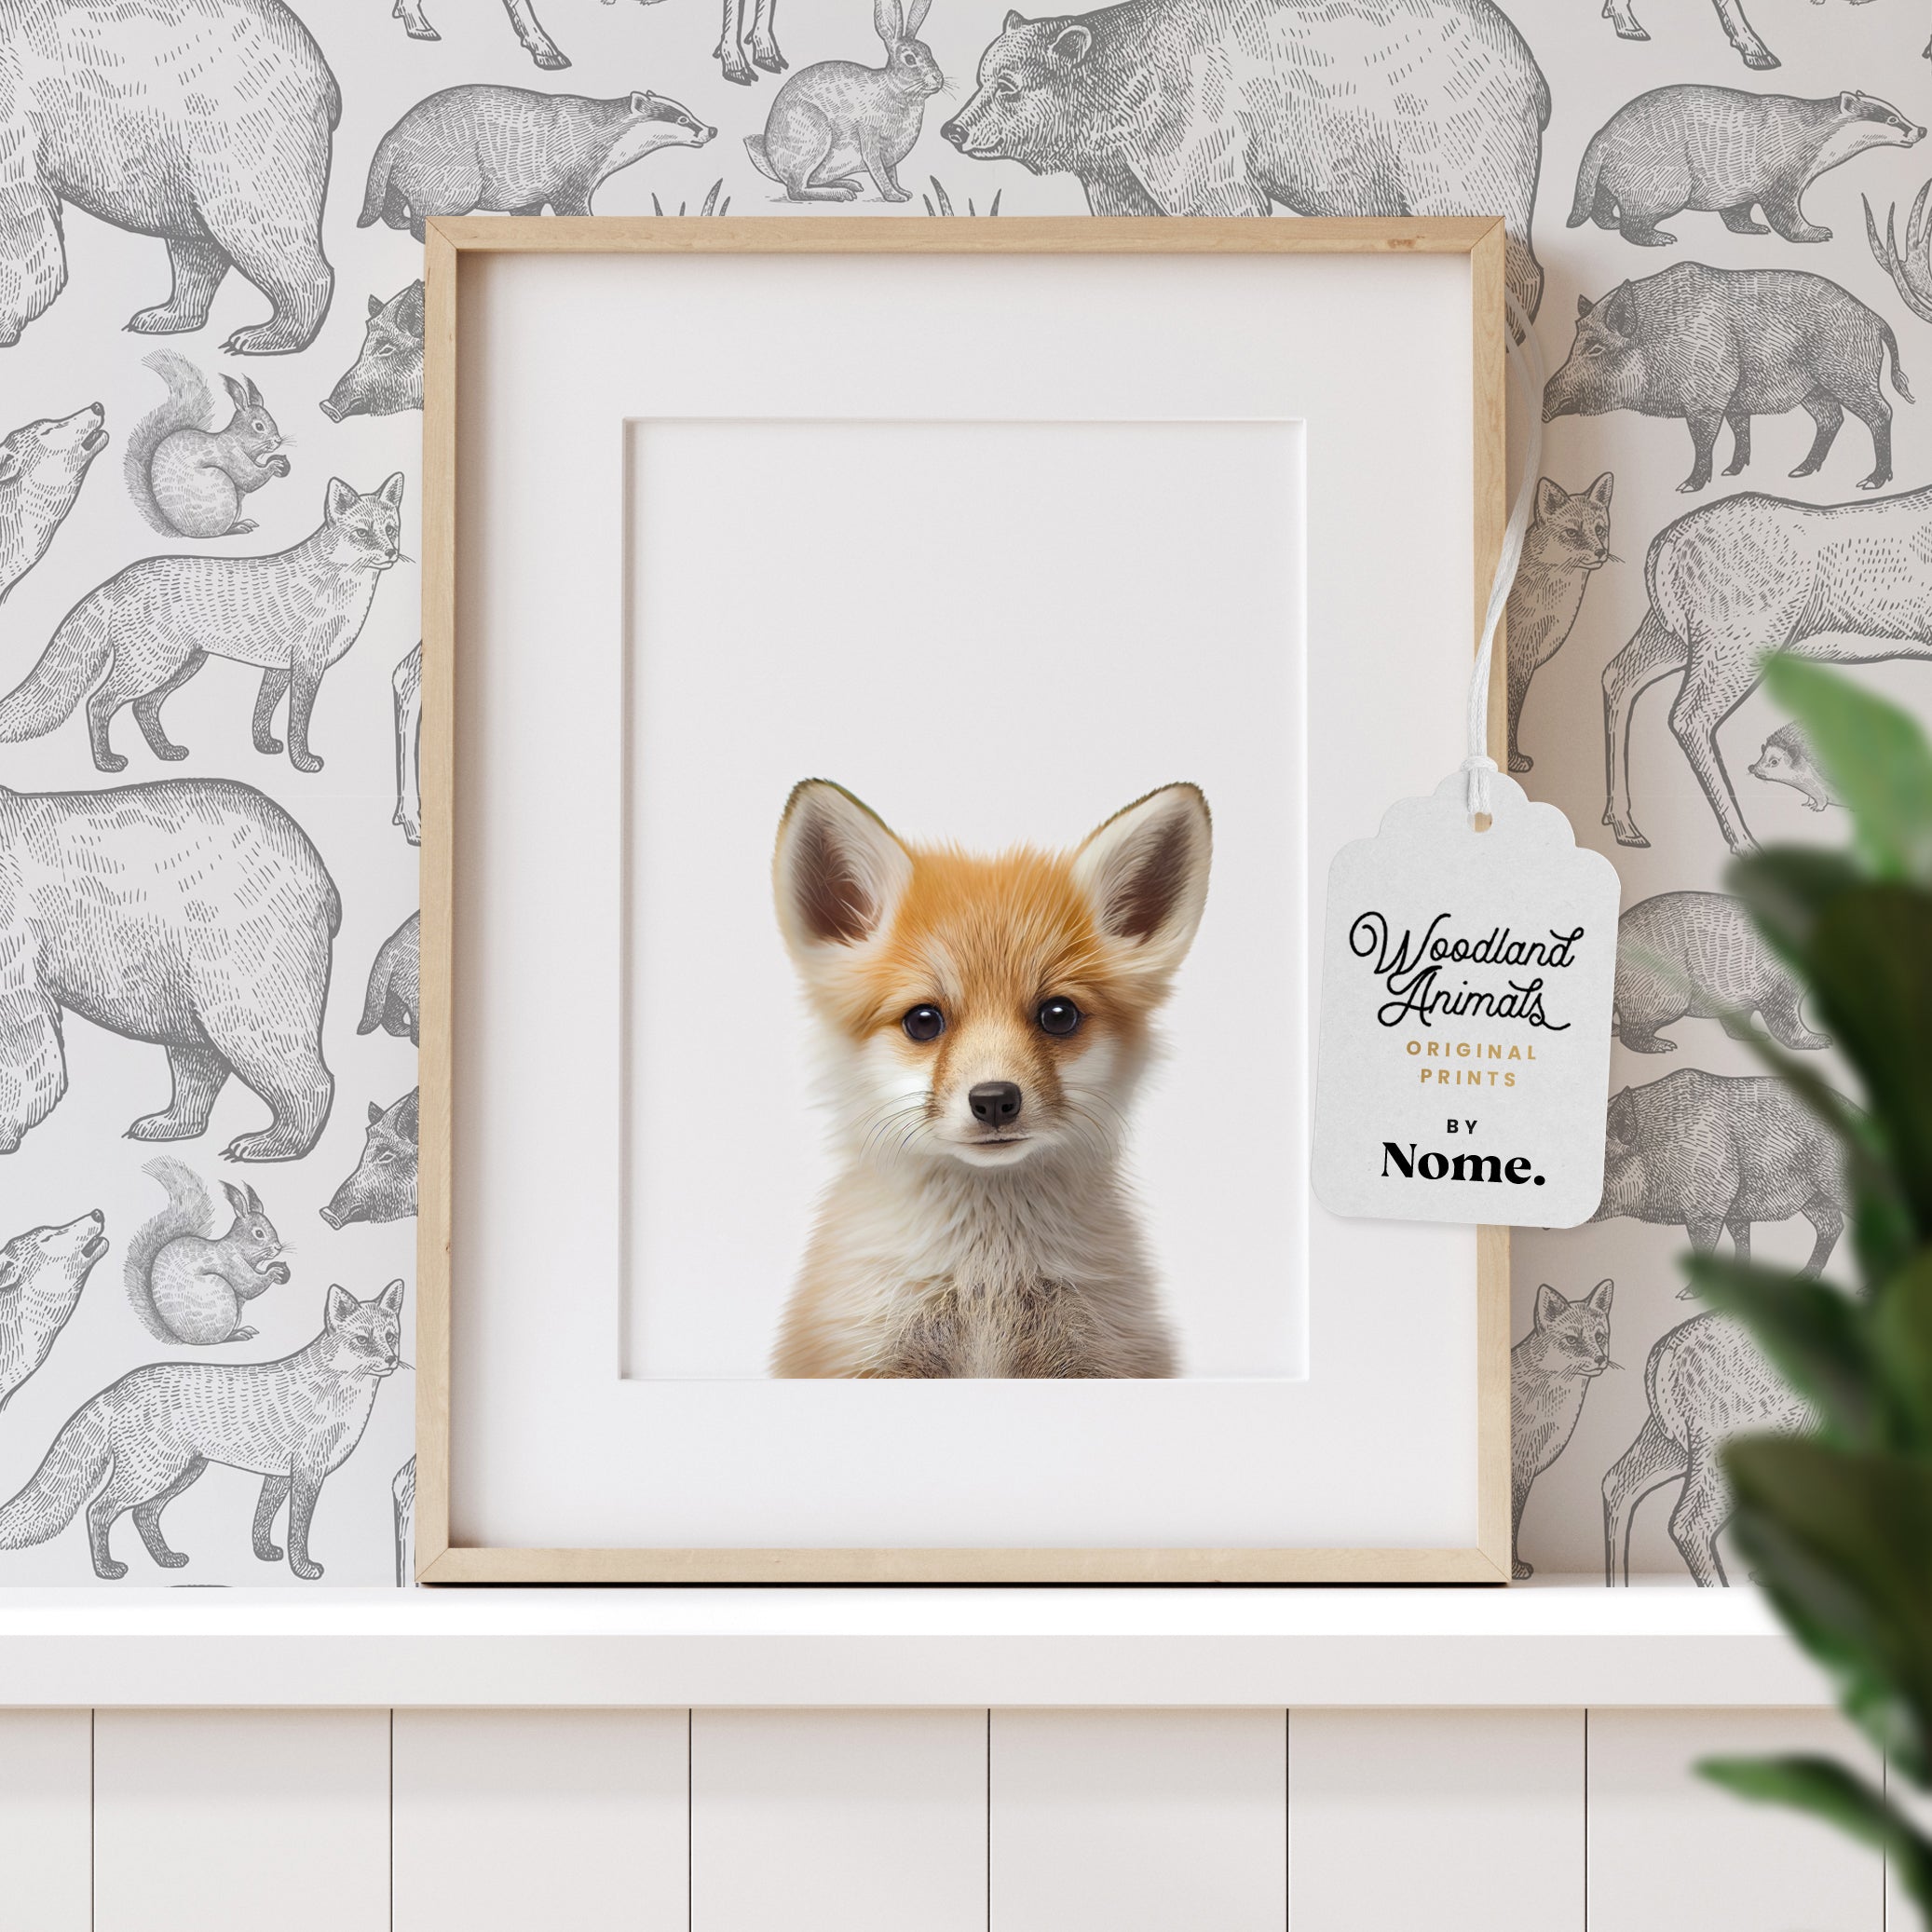 Woodland Animal Print - Baby Fox